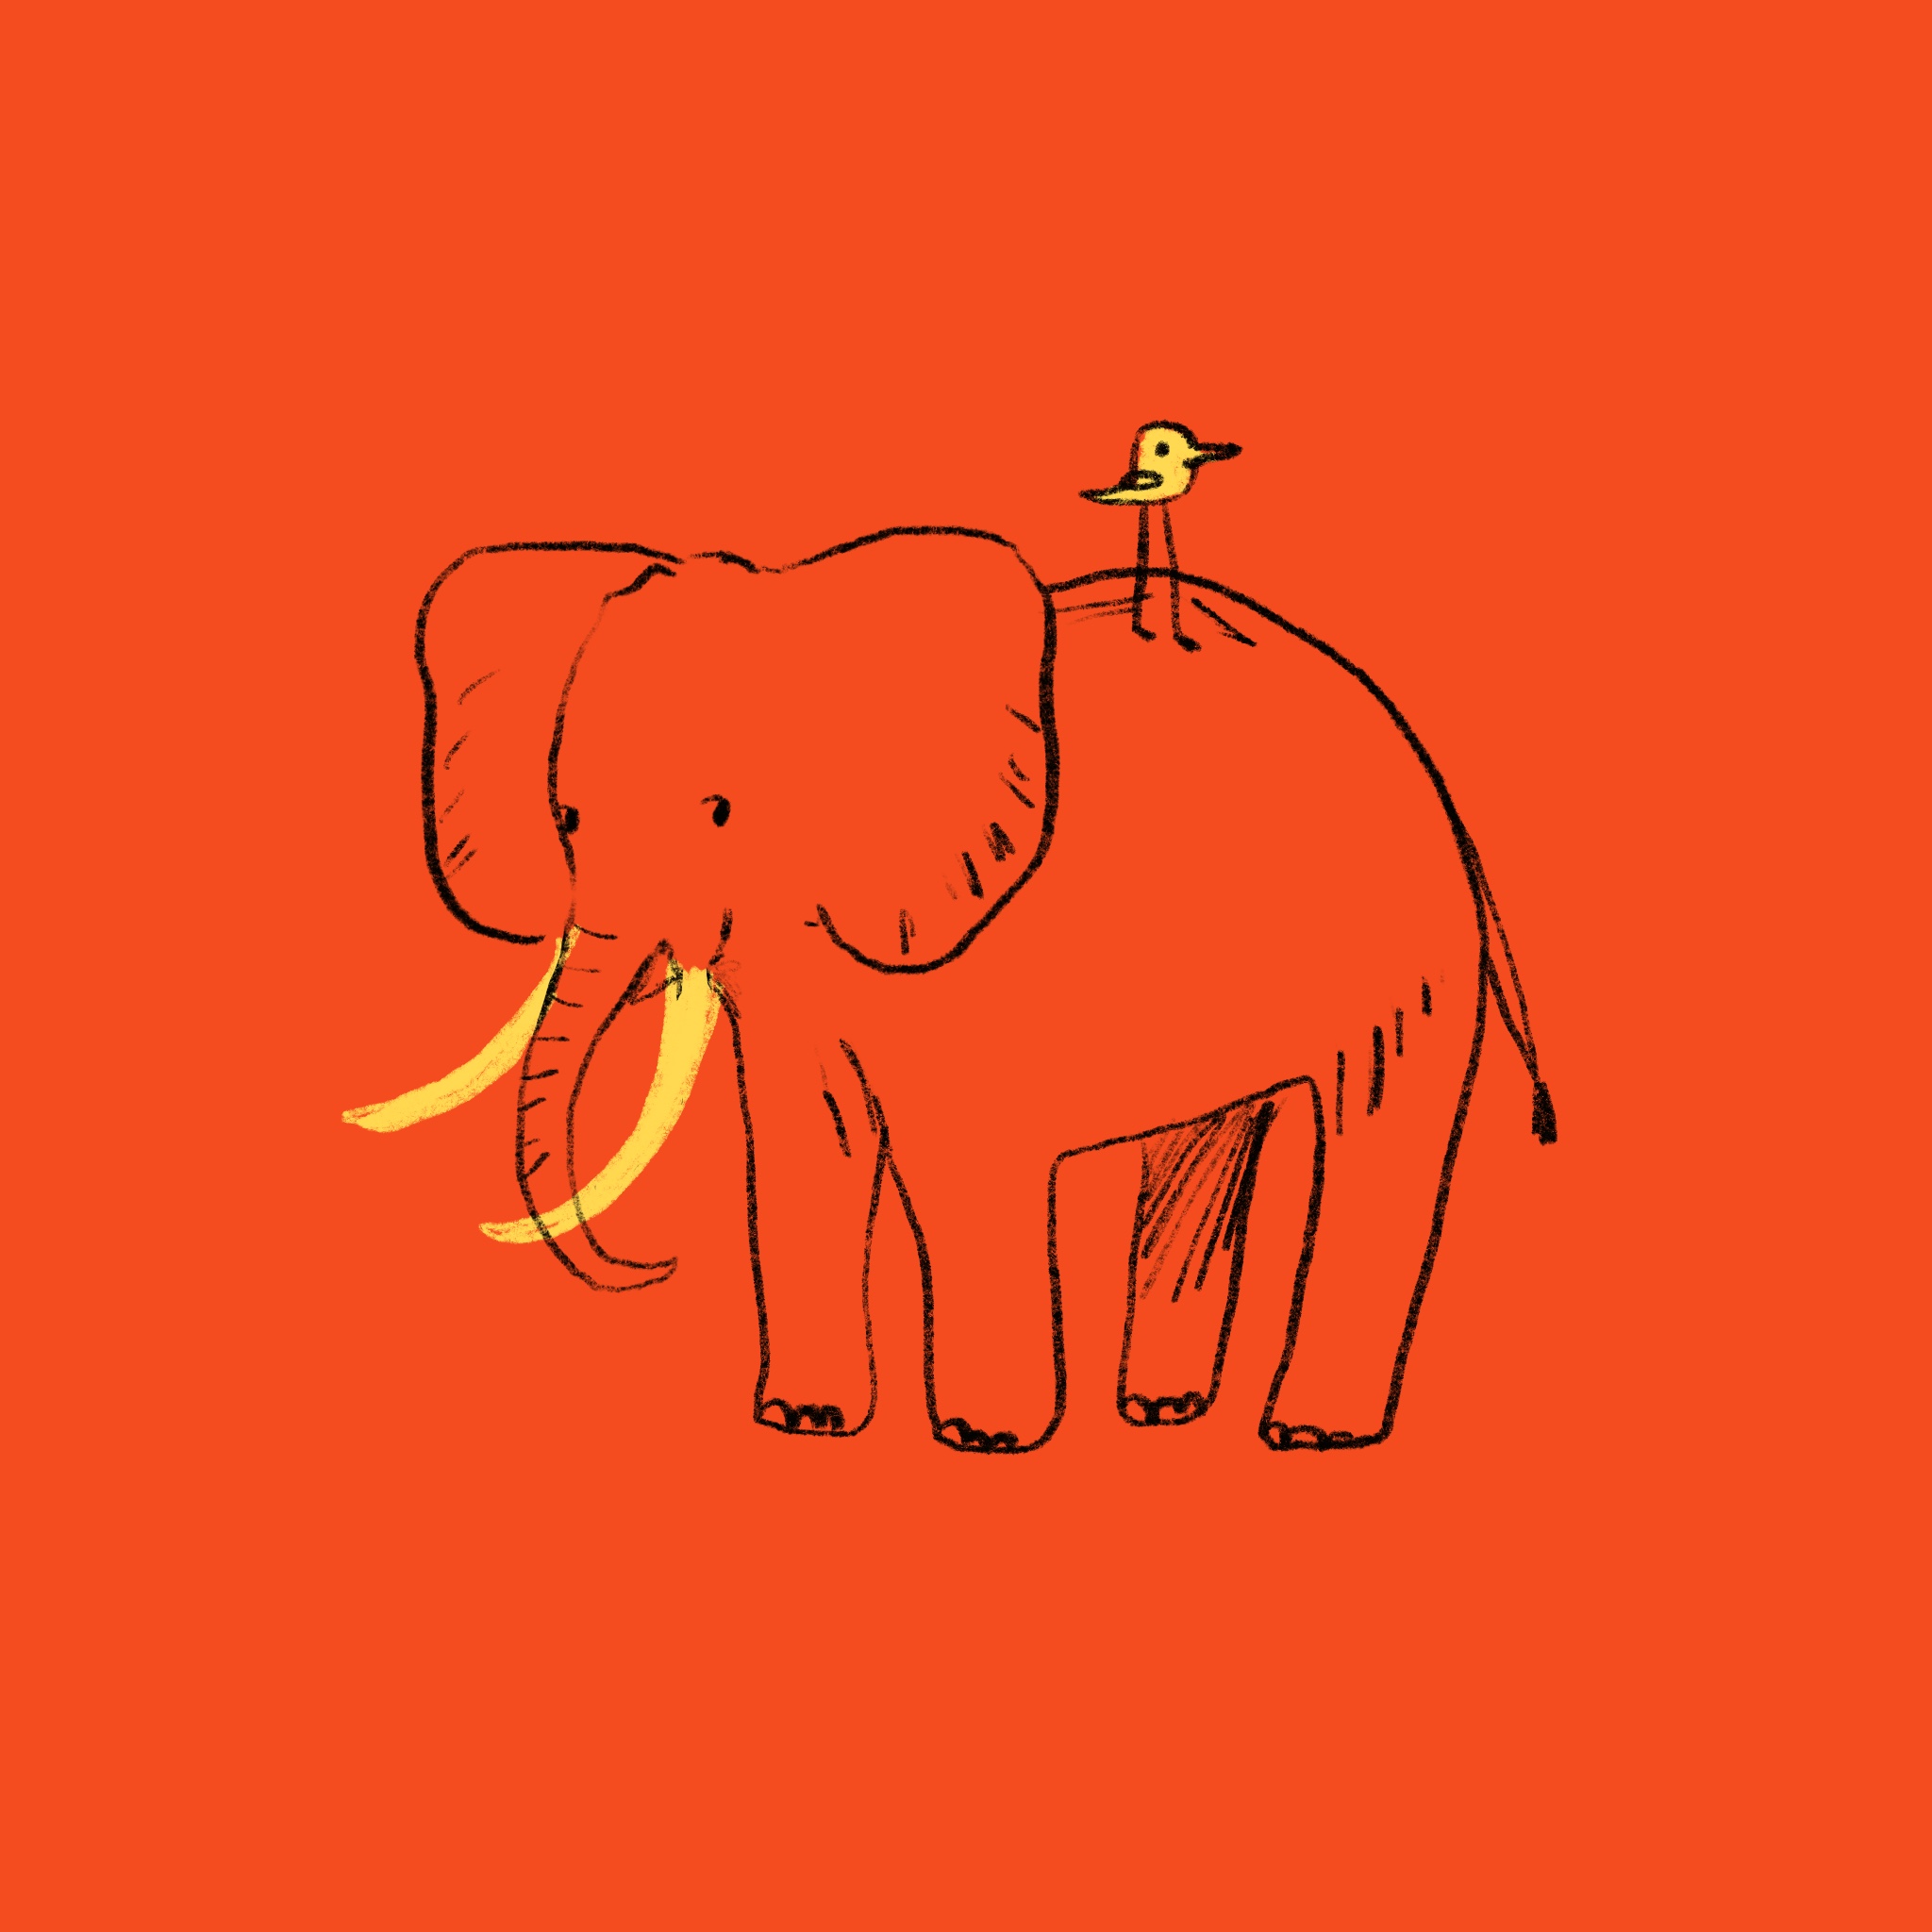 Aleesha's drawing of an elephant